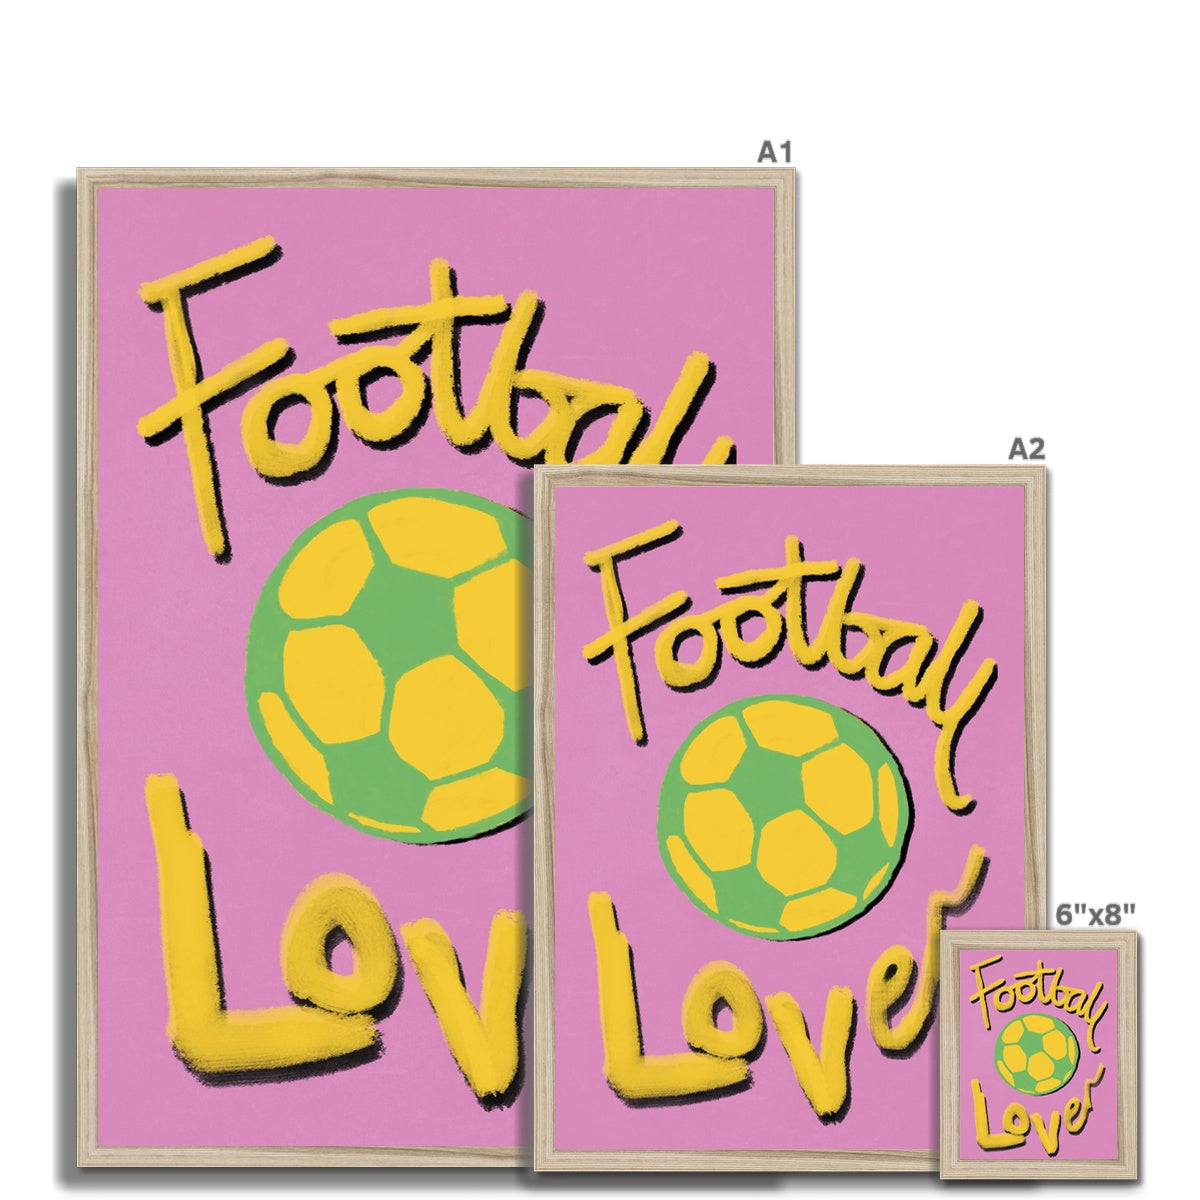 Football Lover Print - Pink, Yellow, Green Framed Print